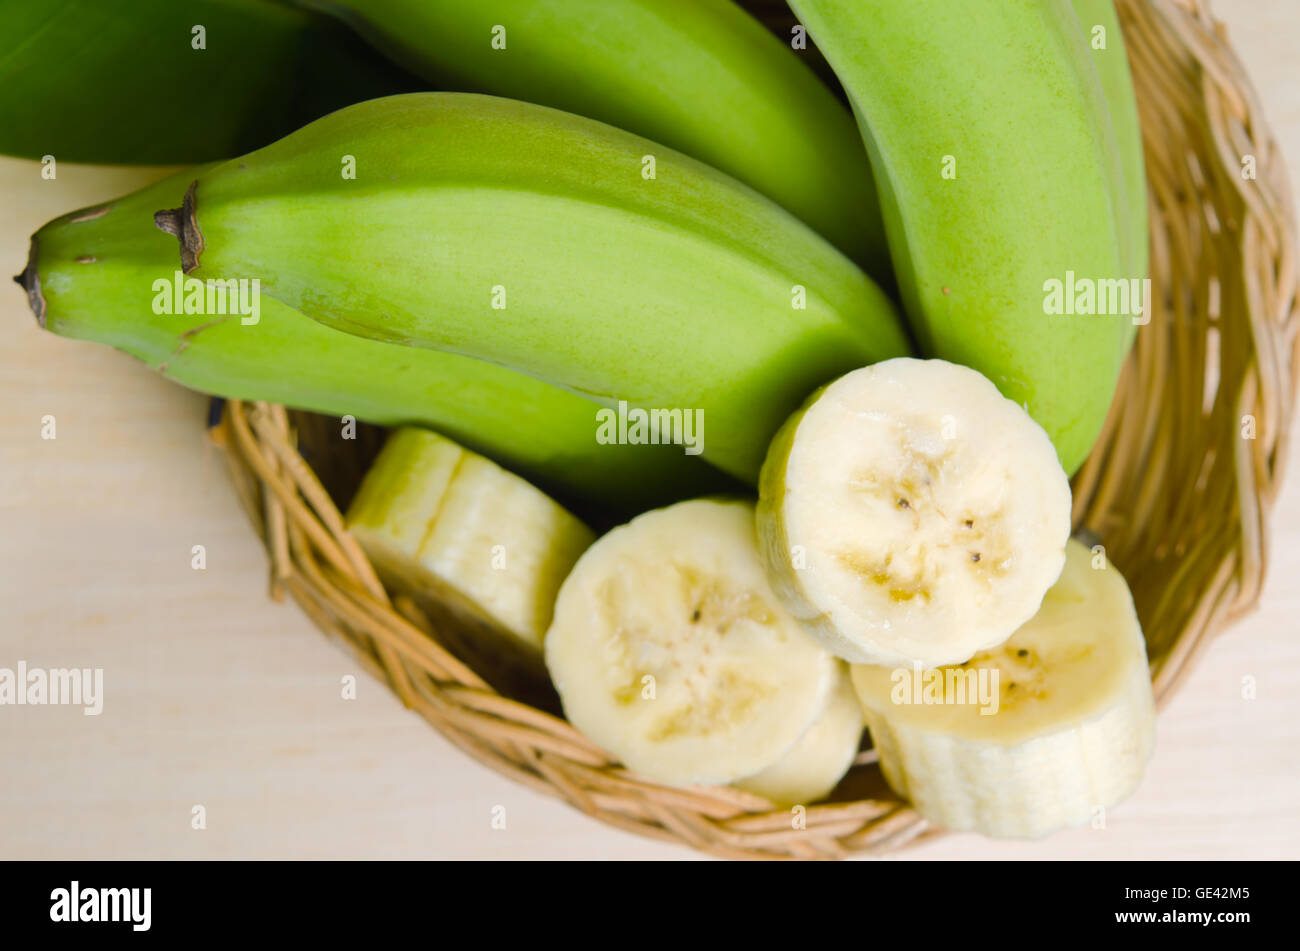 Banana (Other names are Musa acuminata, Musa balbisiana, and Musa x paradisiaca) fruit with banana leaf on basket Stock Photo